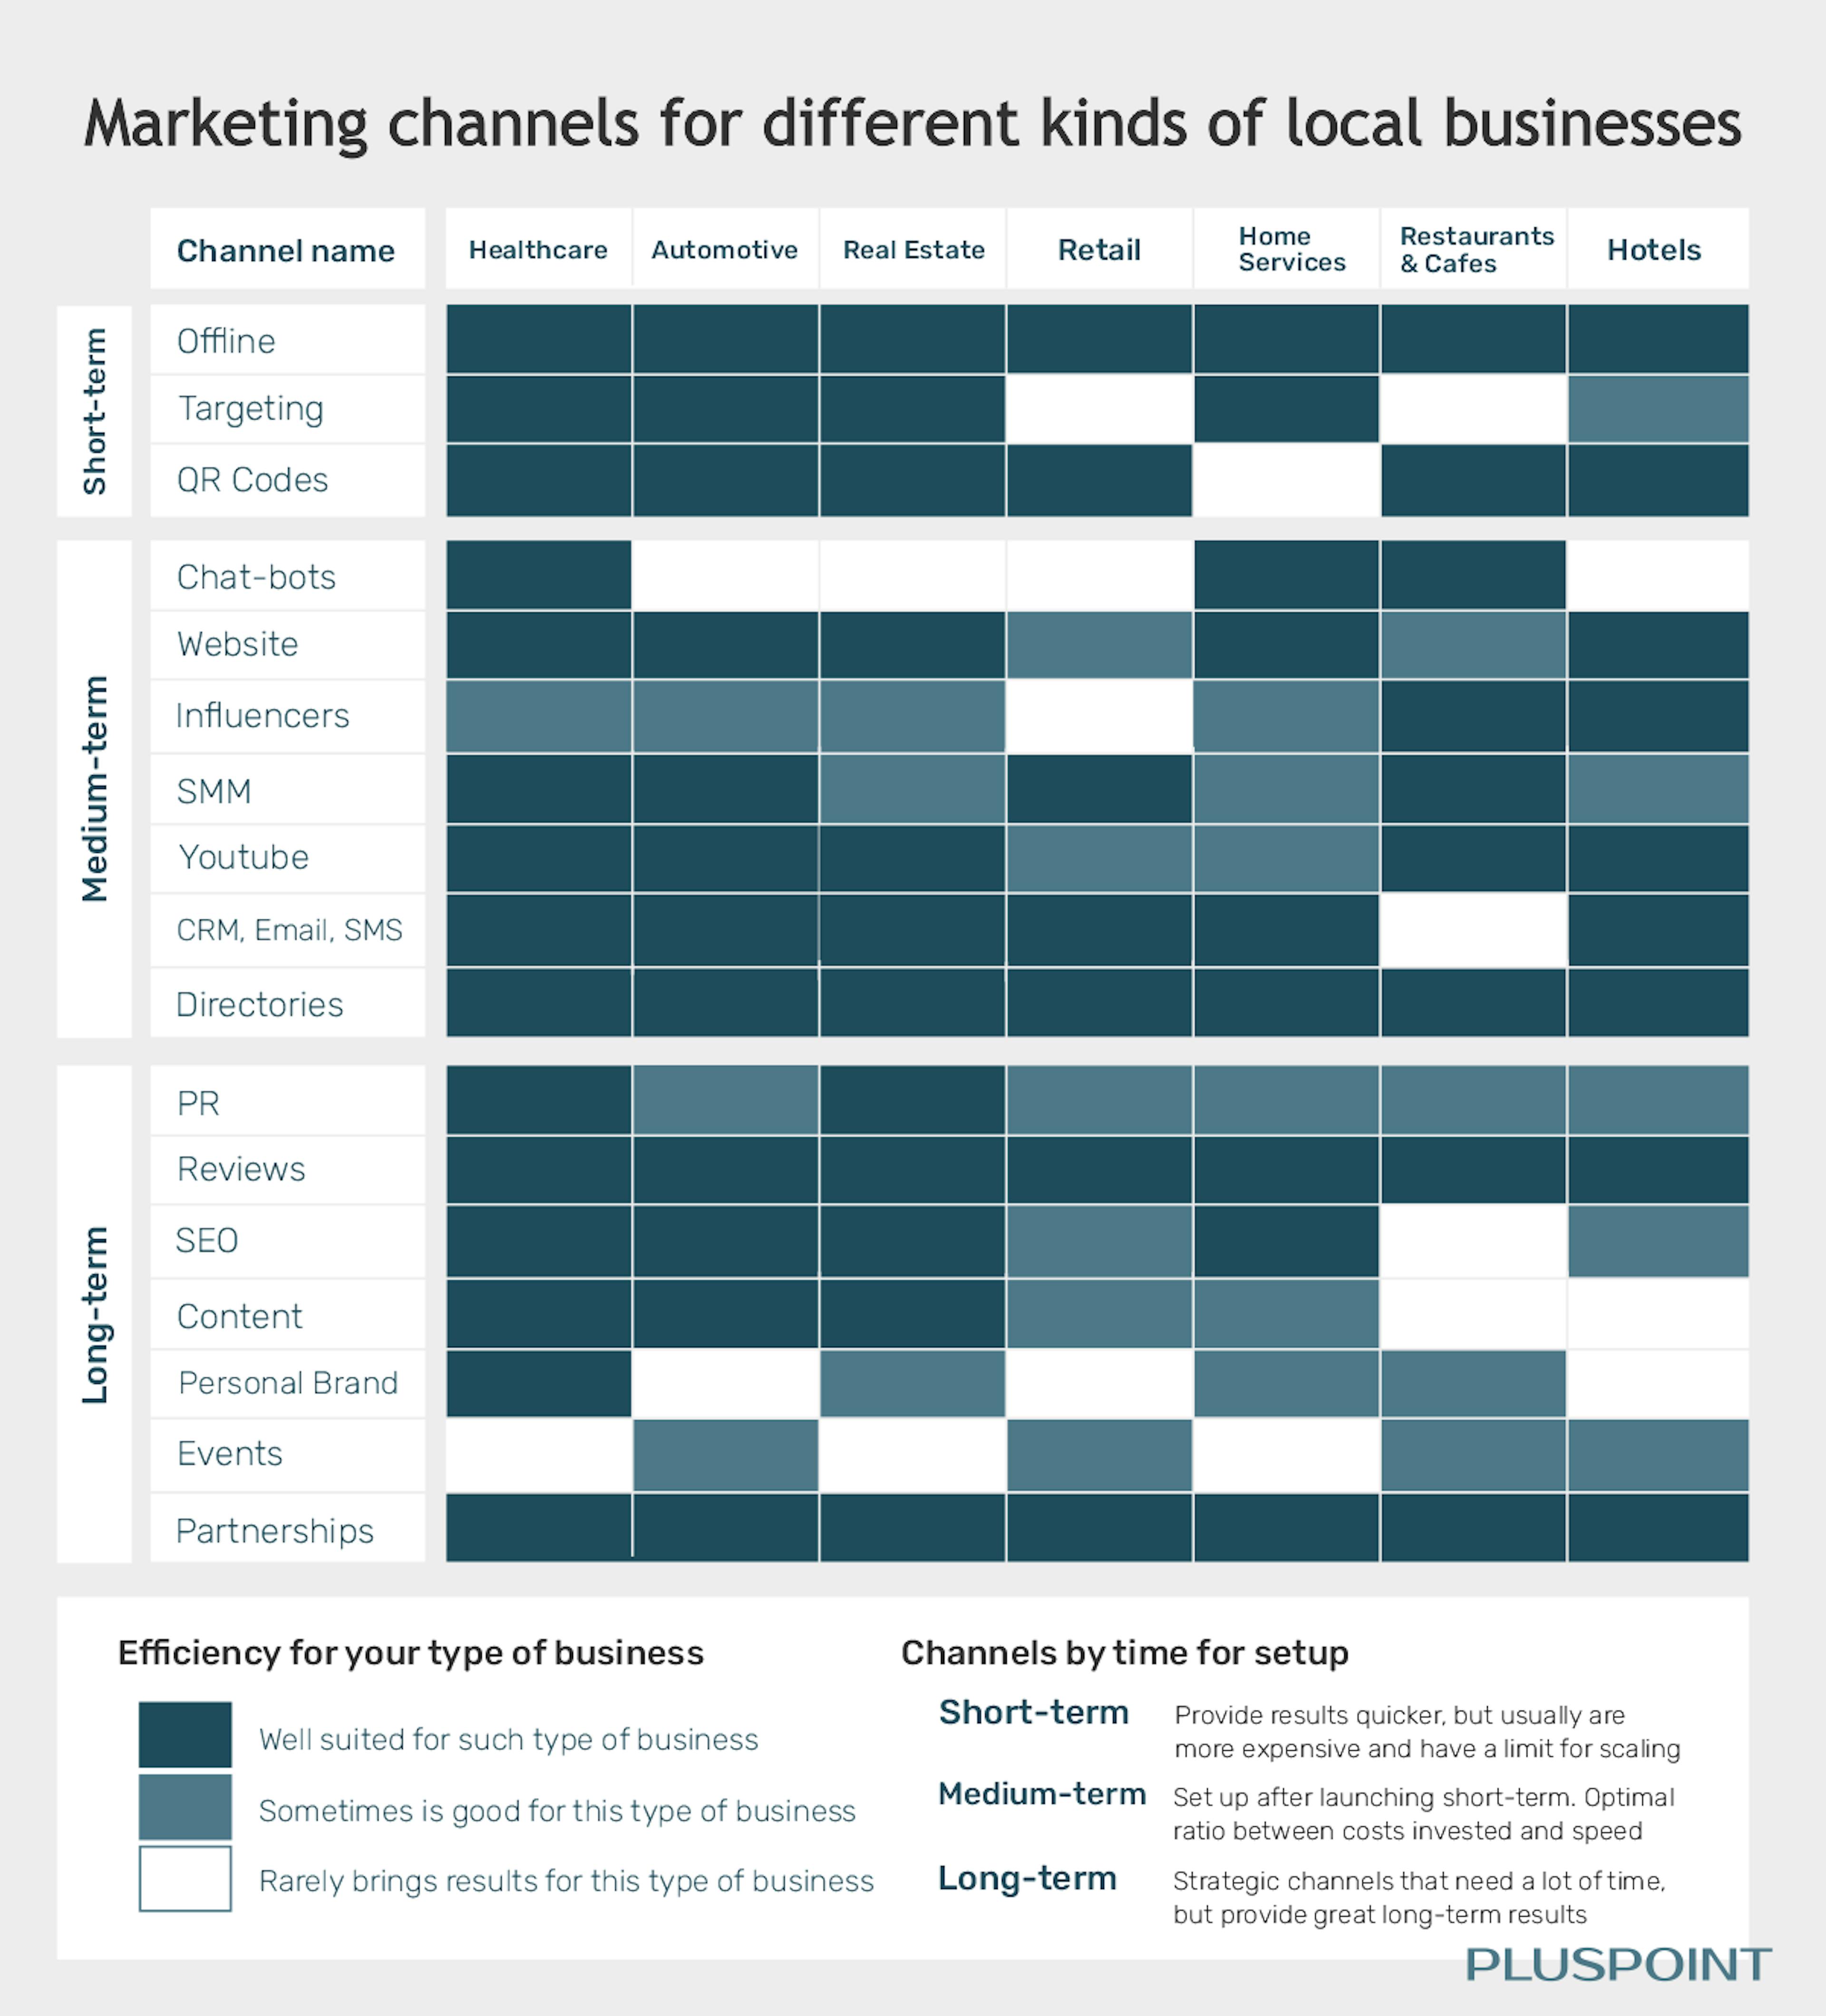 Image credit: https://pluspoint.io/blog/marketing-primer-for-local-businesses